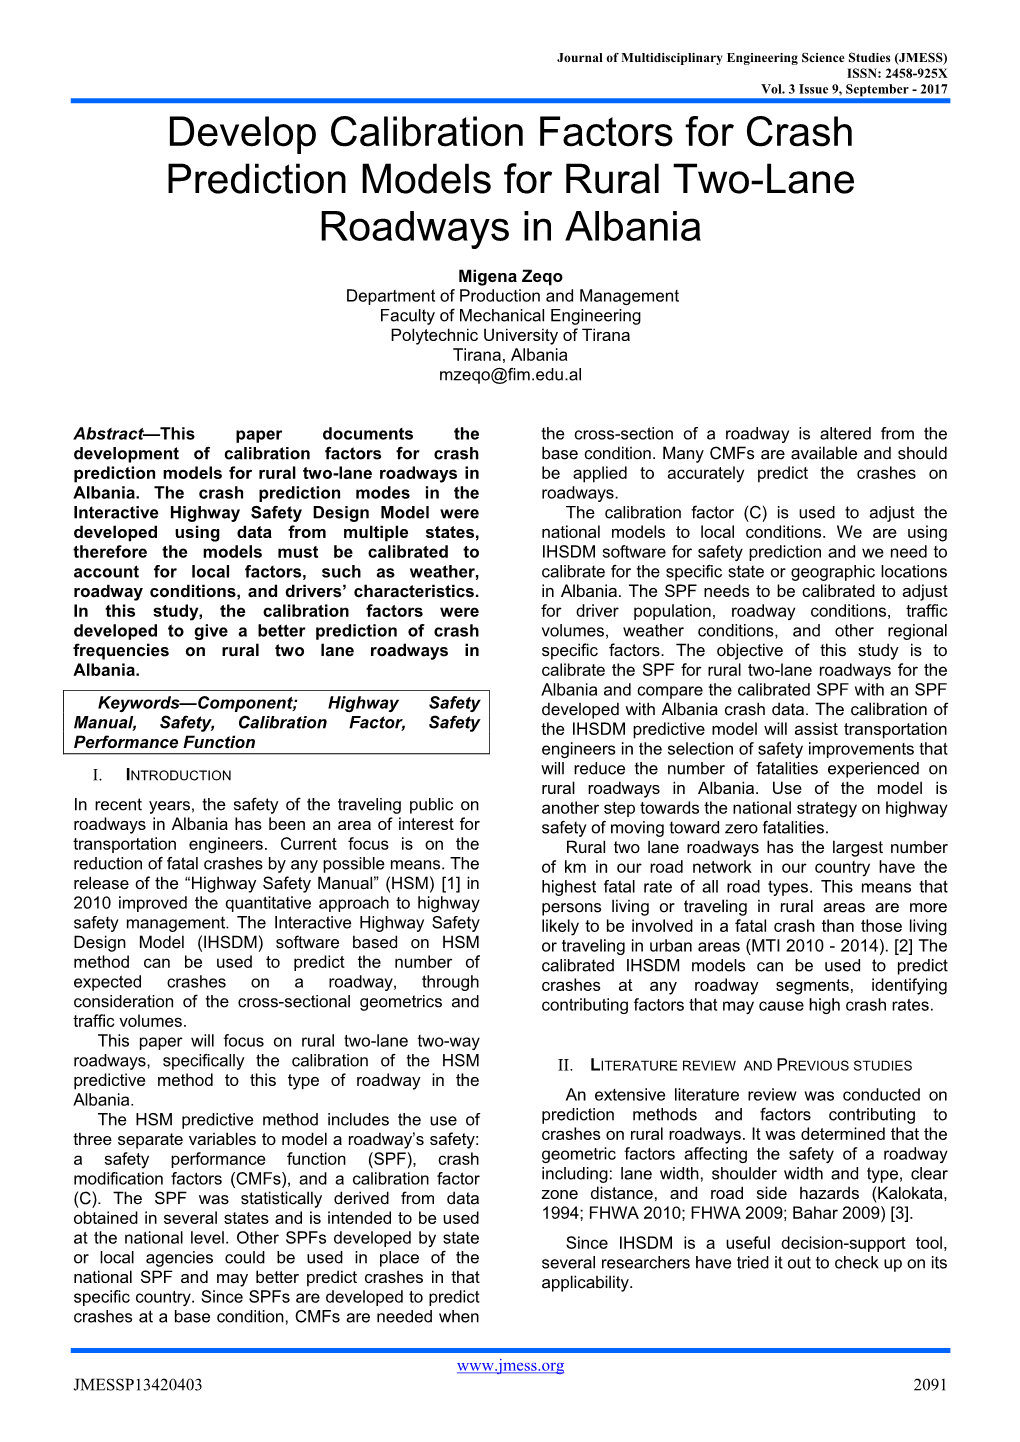 Develop Calibration Factors for Crash Prediction Models for Rural Two-Lane Roadways in Albania